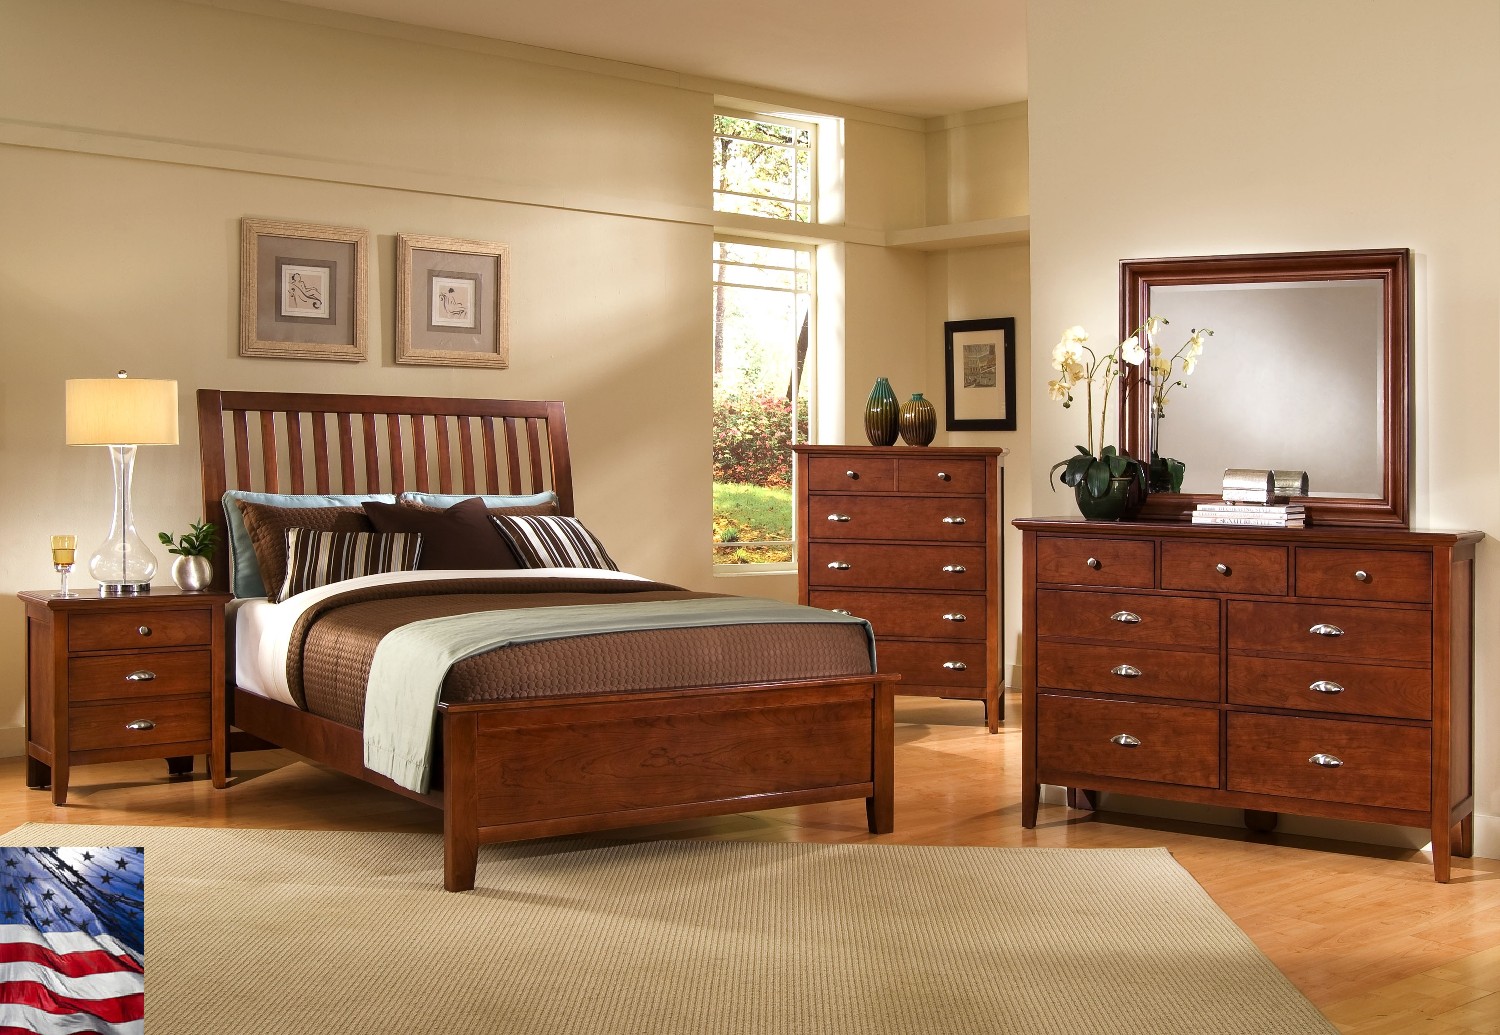 brown furniture in the bedroom